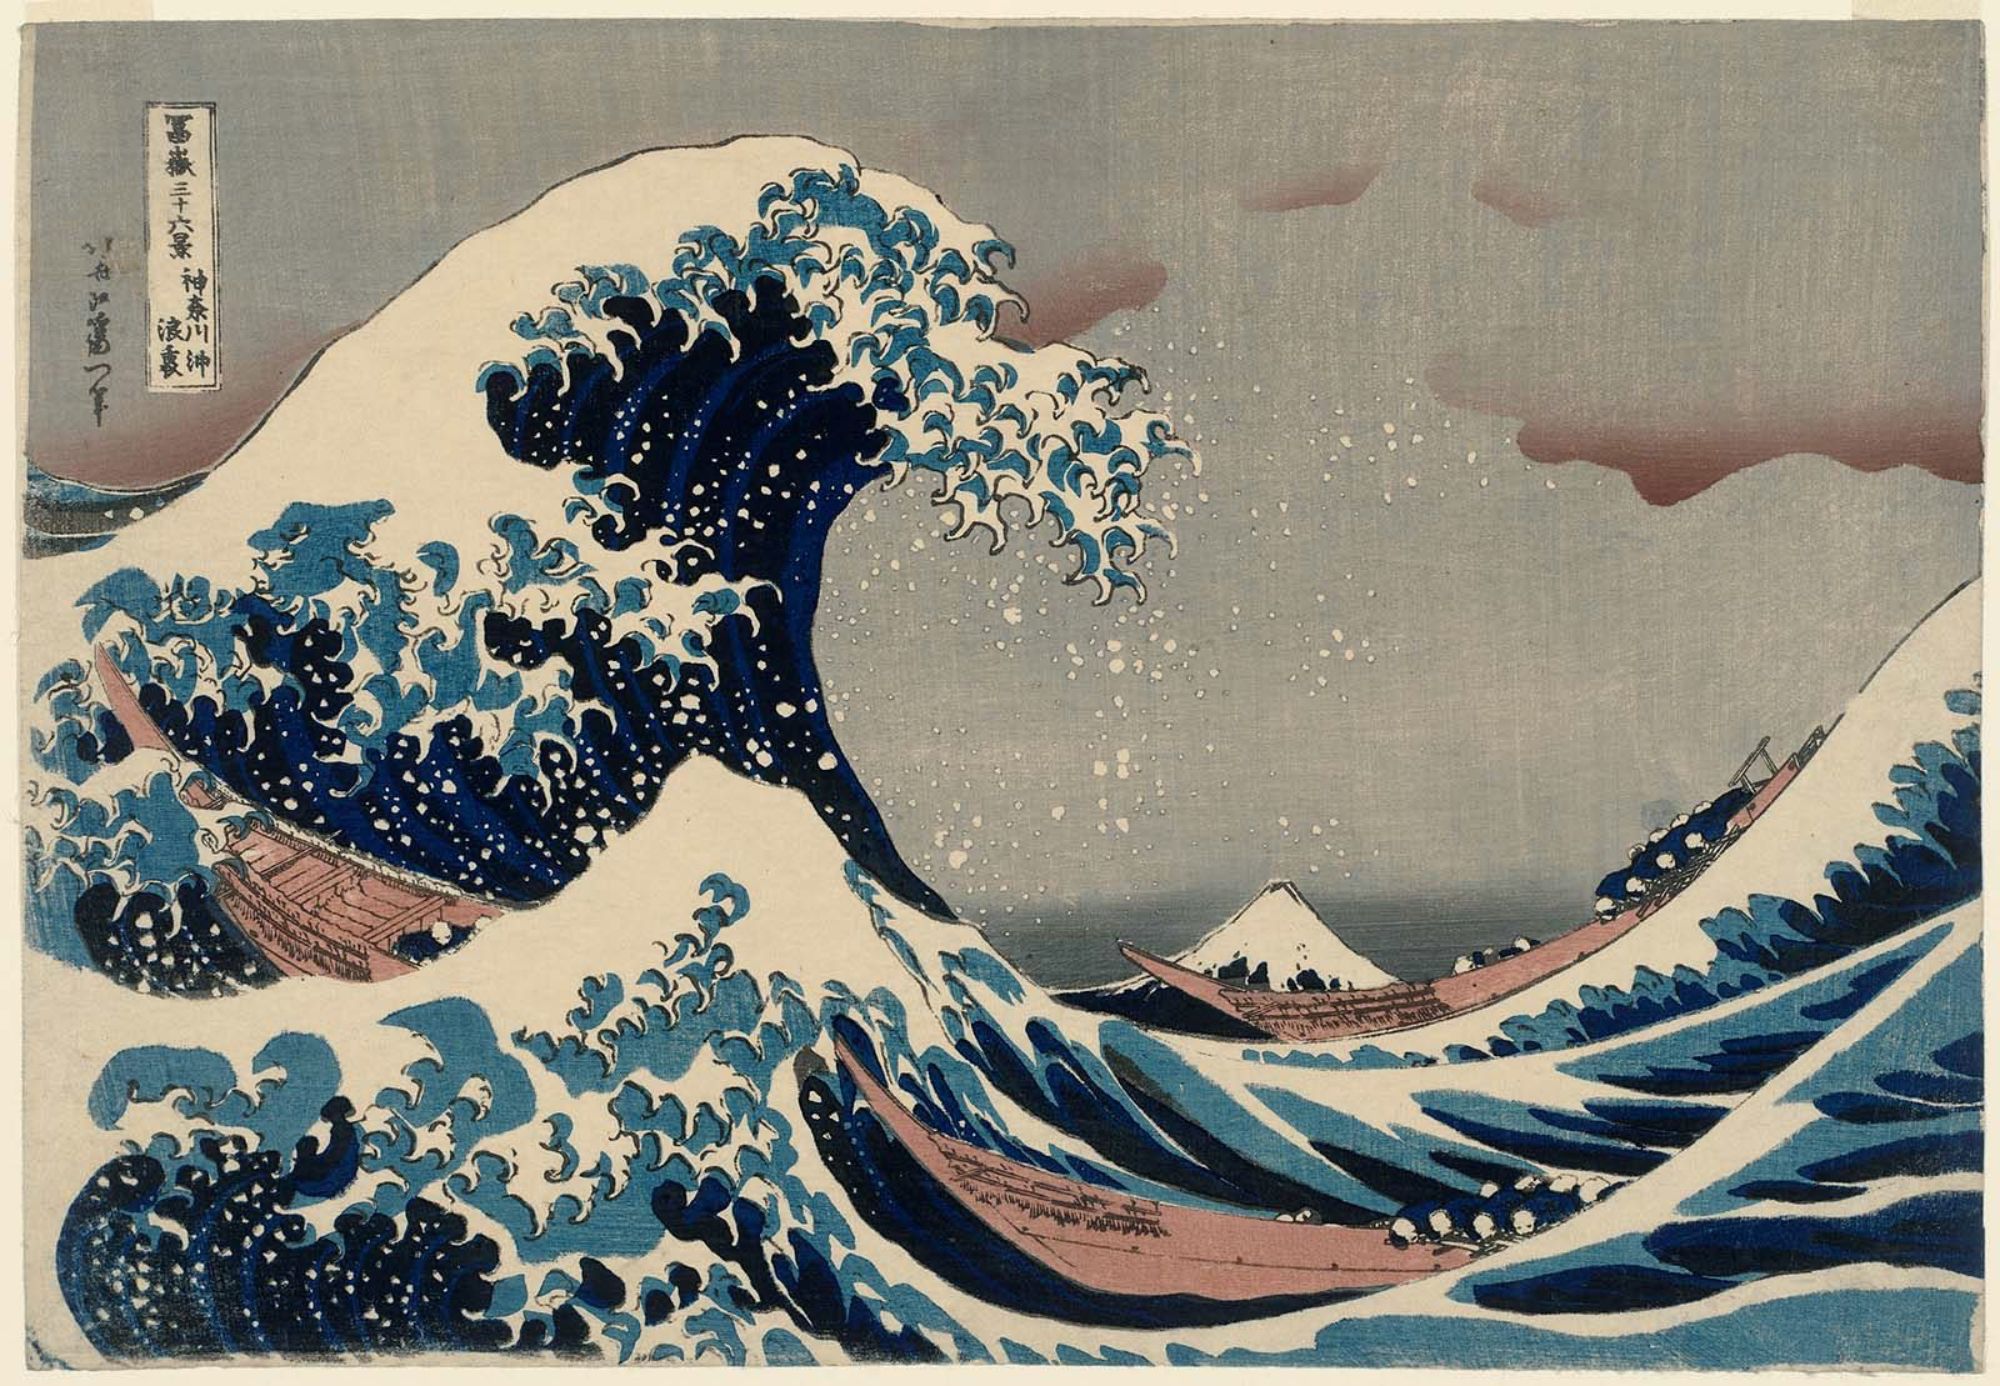 葛飾北斎: Under the Wave off Kanagawa (Kanagawa-oki nami-ura), also known